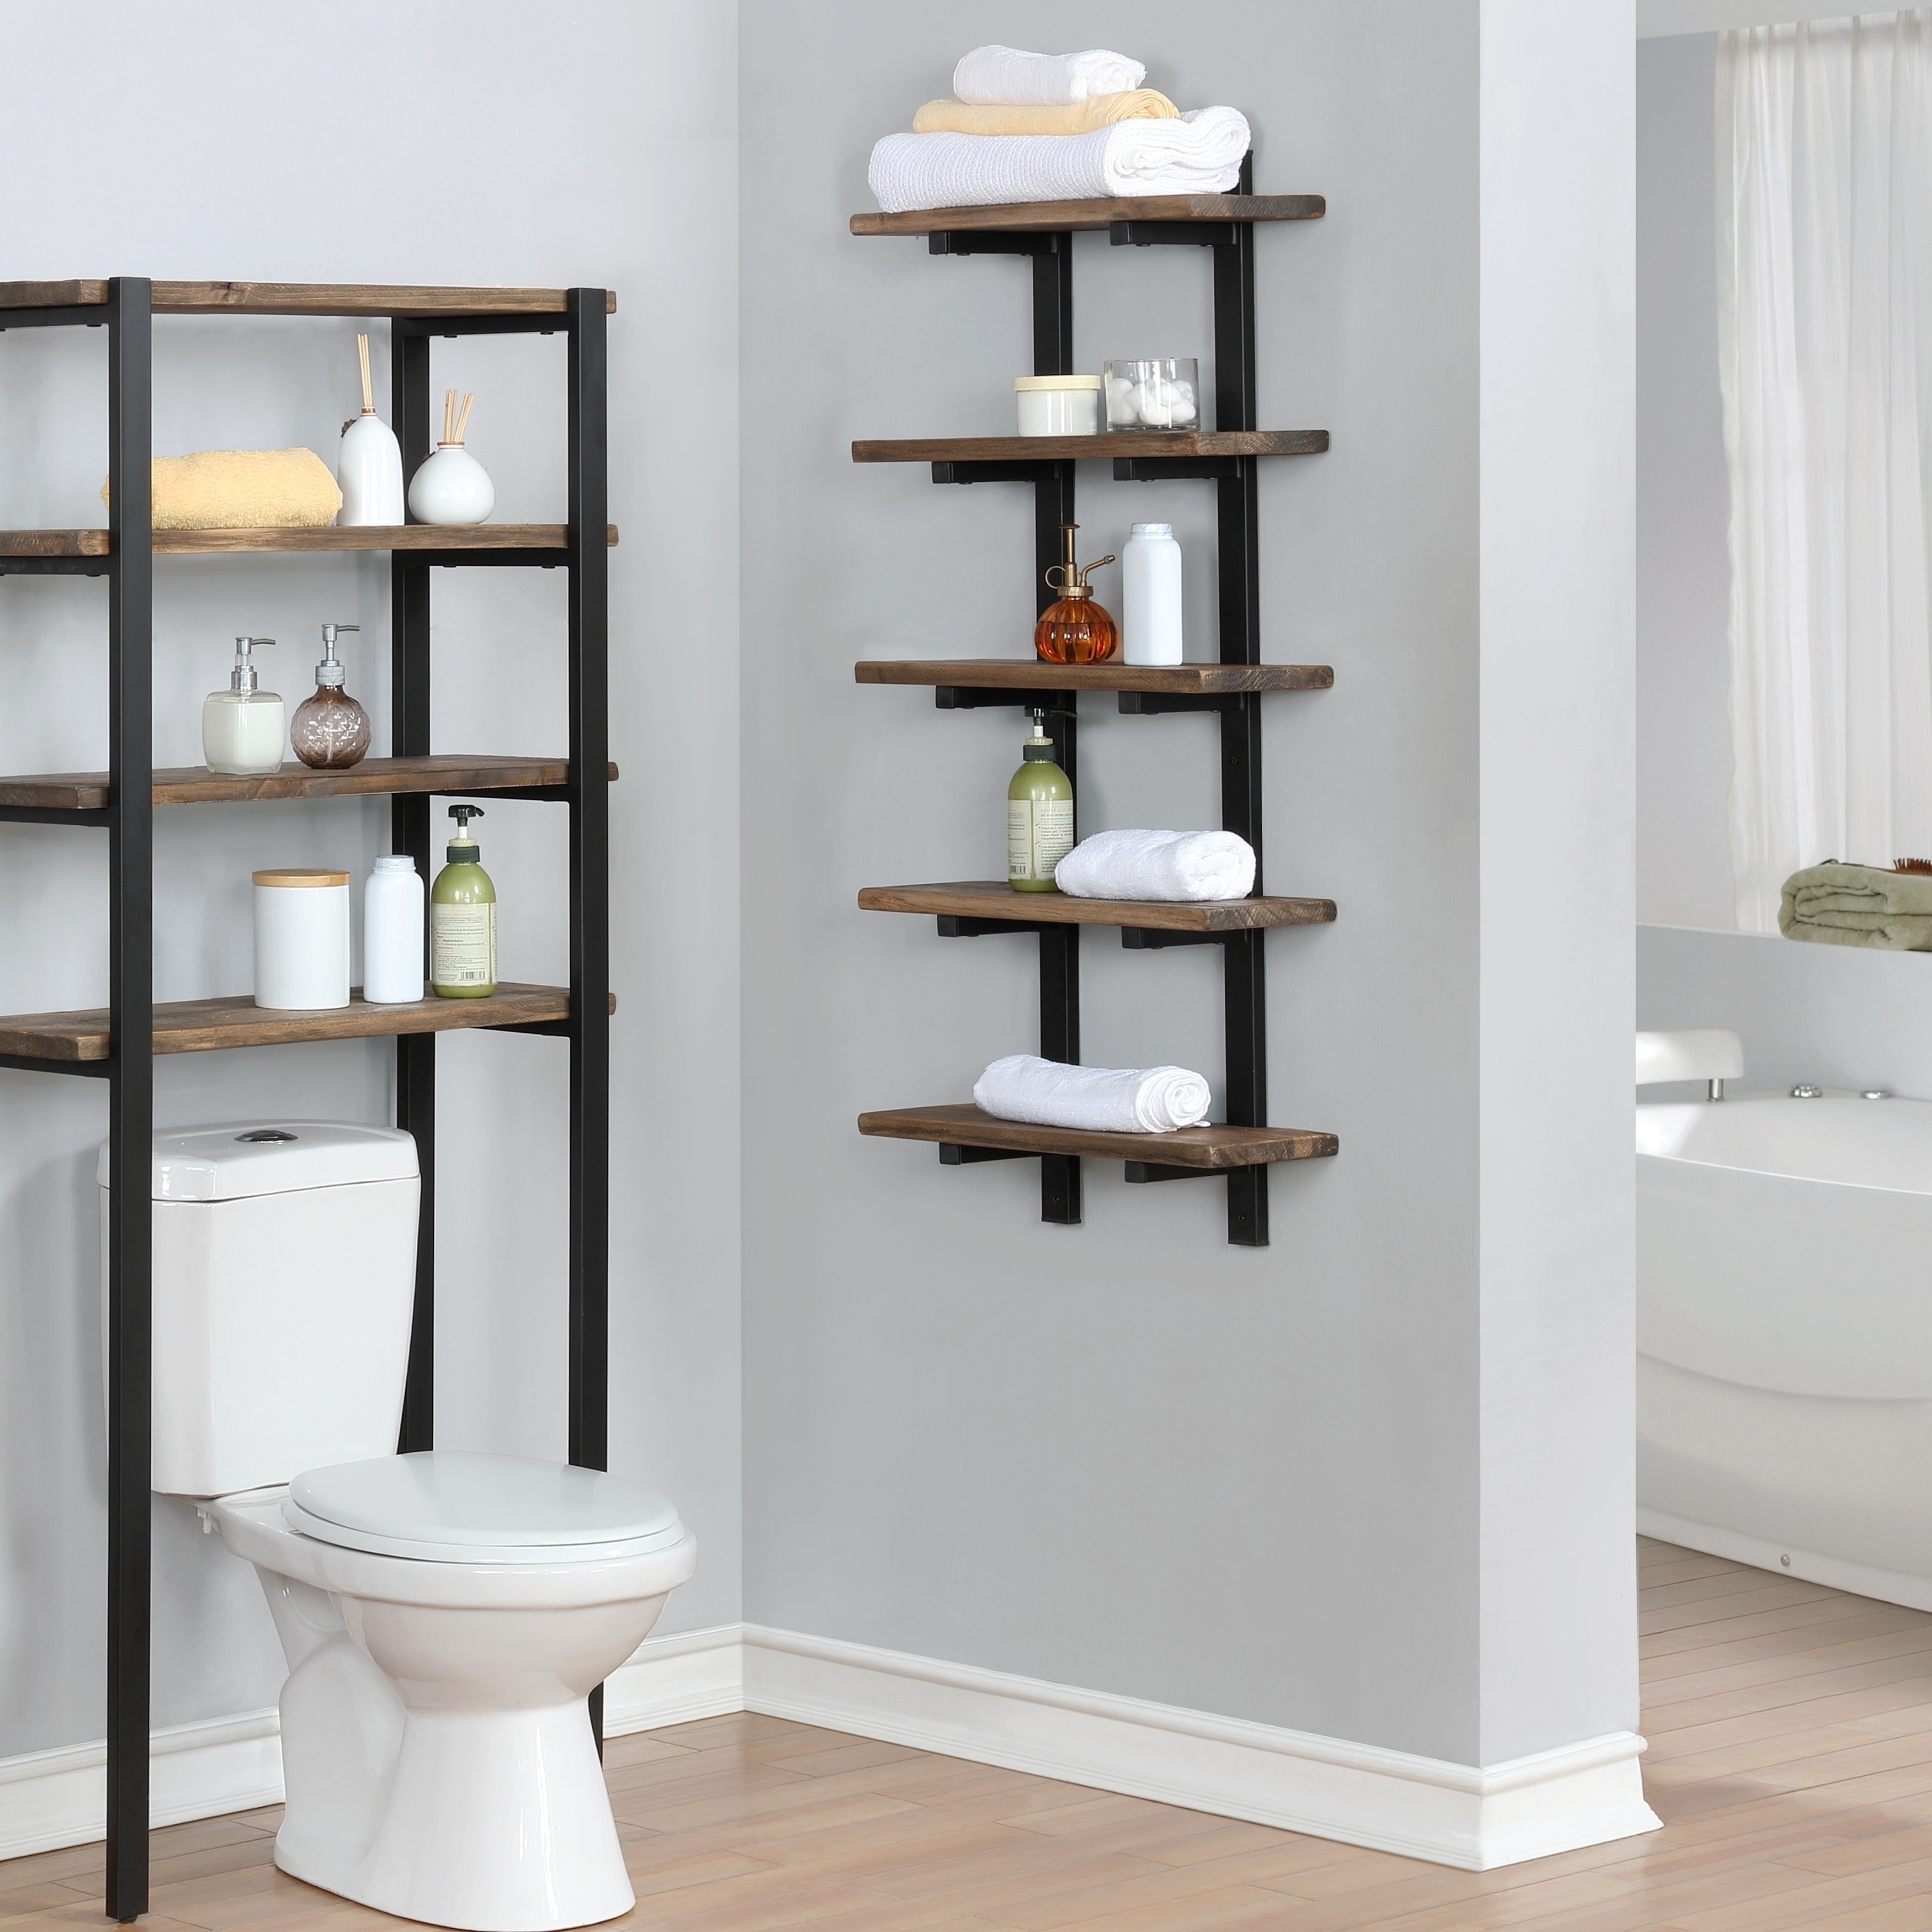 Galvanized Wash Tub With Shelves Wall Hanging Shelf Farmhouse Shelf Rustic Bathroom  Shelf Mudroom or Laundry Shelf 